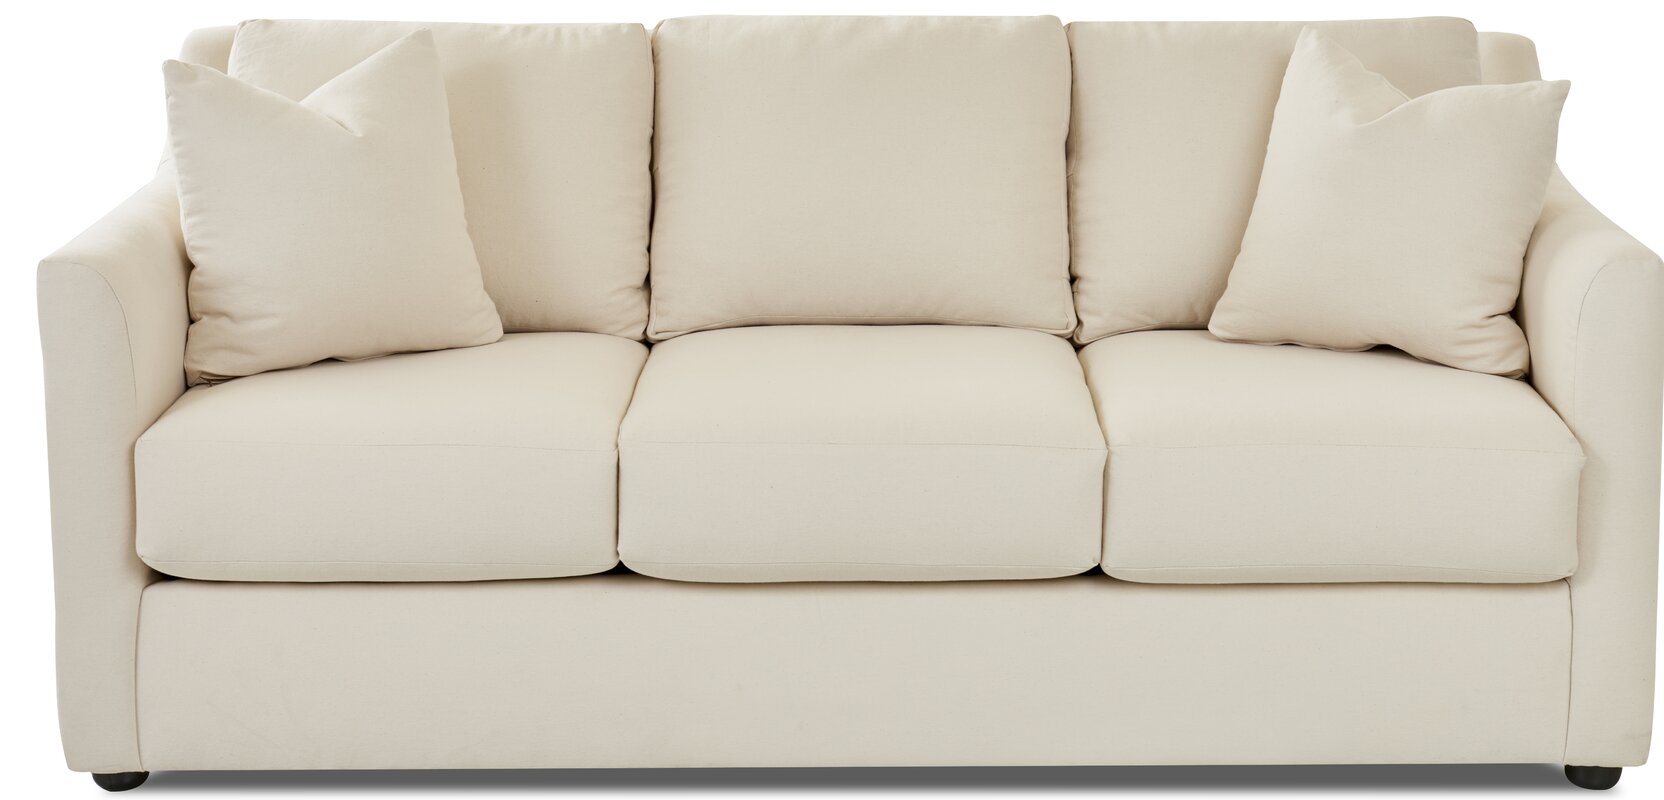 wayfair commercial sofa beds